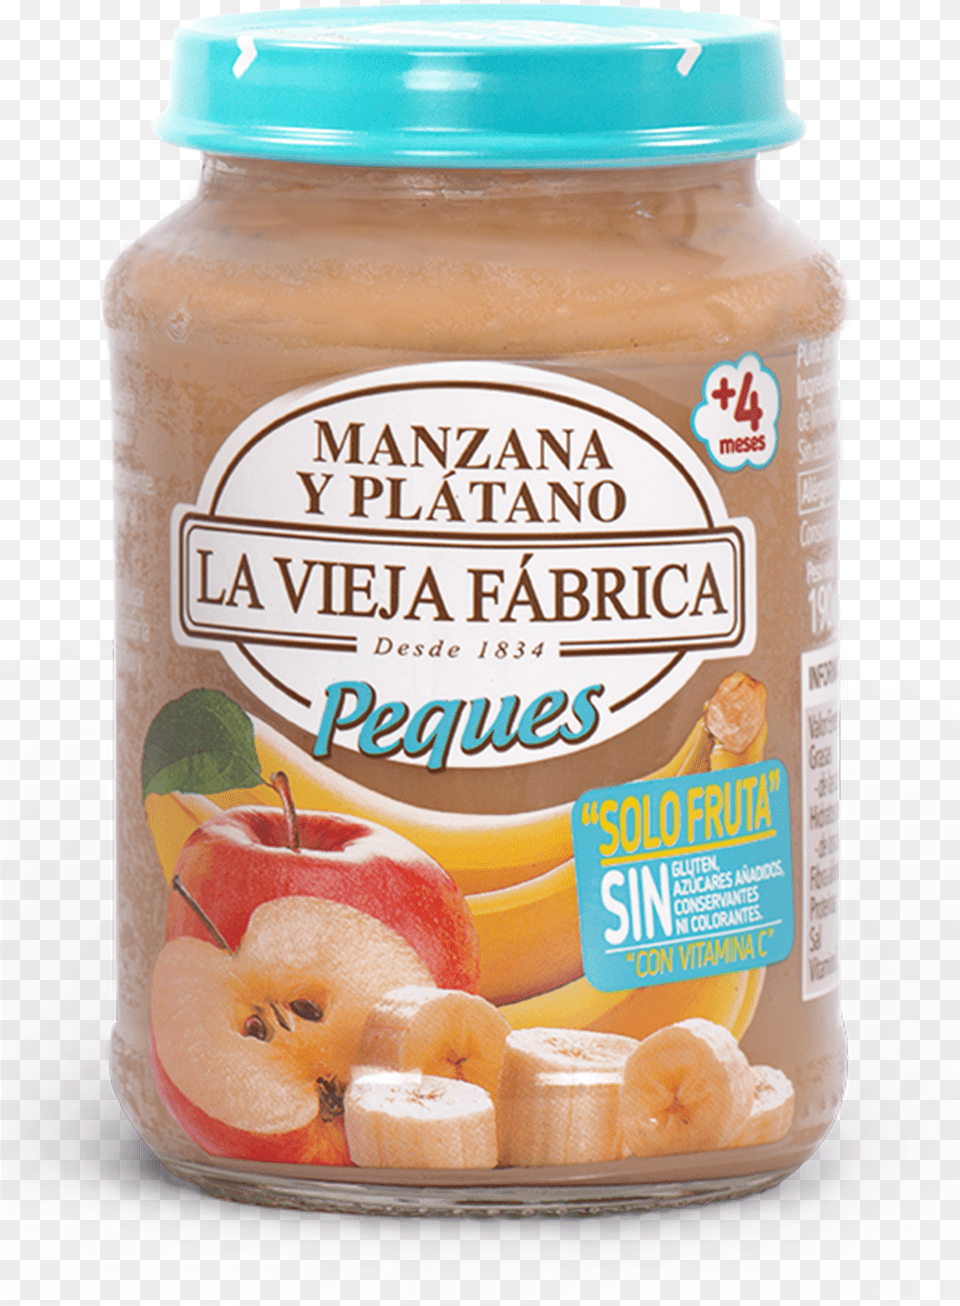 La Vieja Fabrica Pineapple Mermelada 350g Download Tangerine, Food, Peanut Butter, Apple, Fruit Free Png